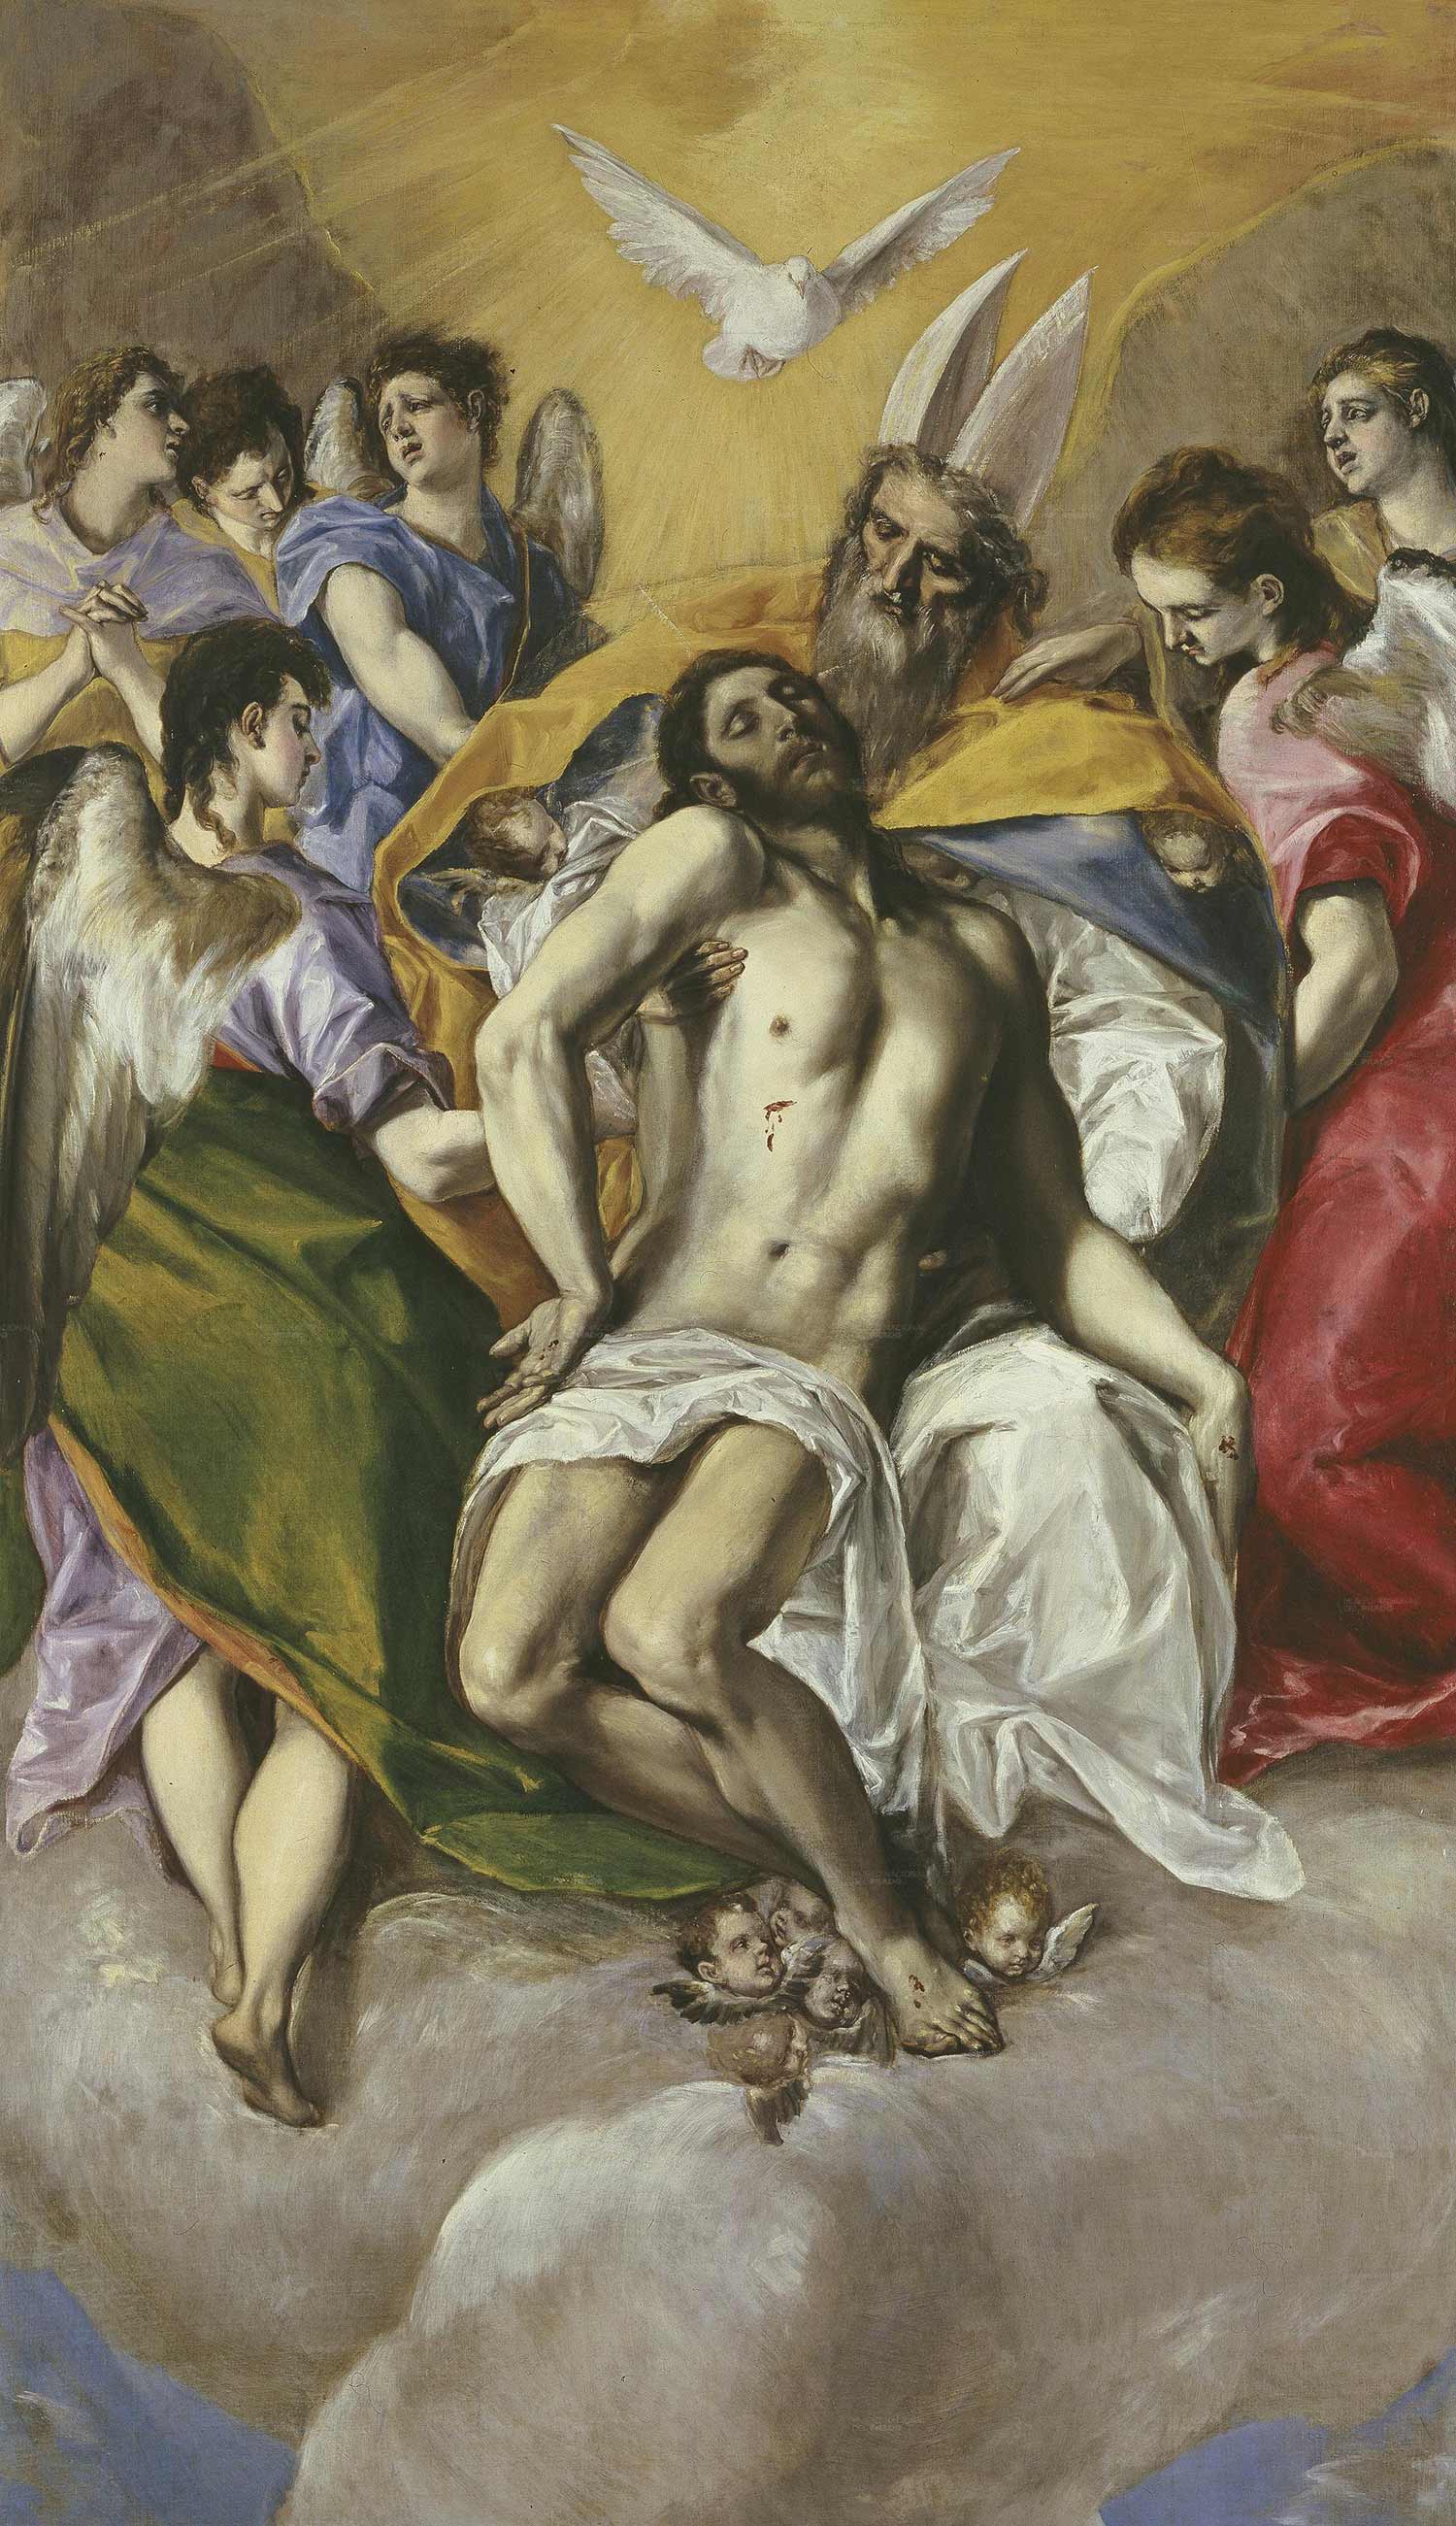 Óleo sobre lienzo, 300 x 179 cm. Museo del Prado, Madrid.